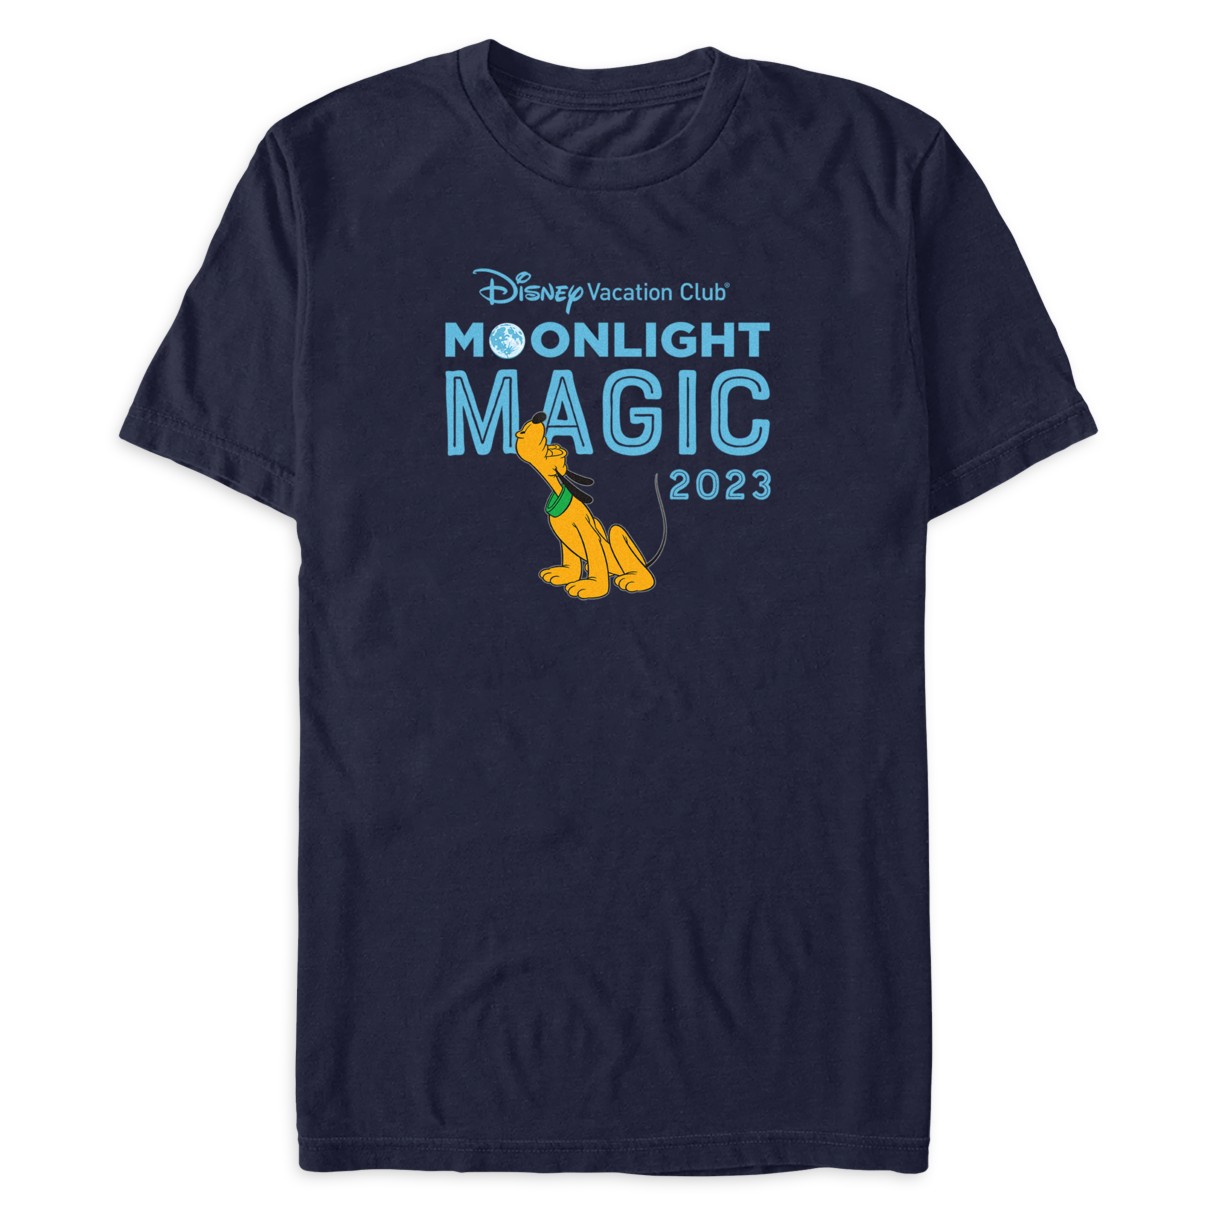 Disney Vacation Club Moonlight Magic 2023 T-Shirt for Adults